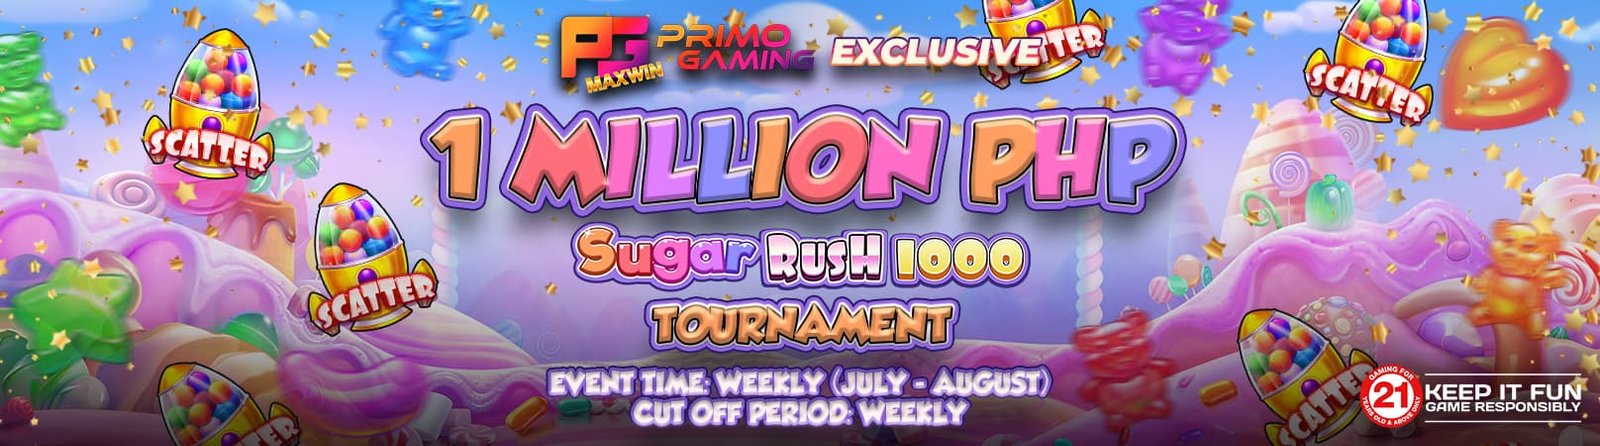 Sugar Rush 1000 Tournament